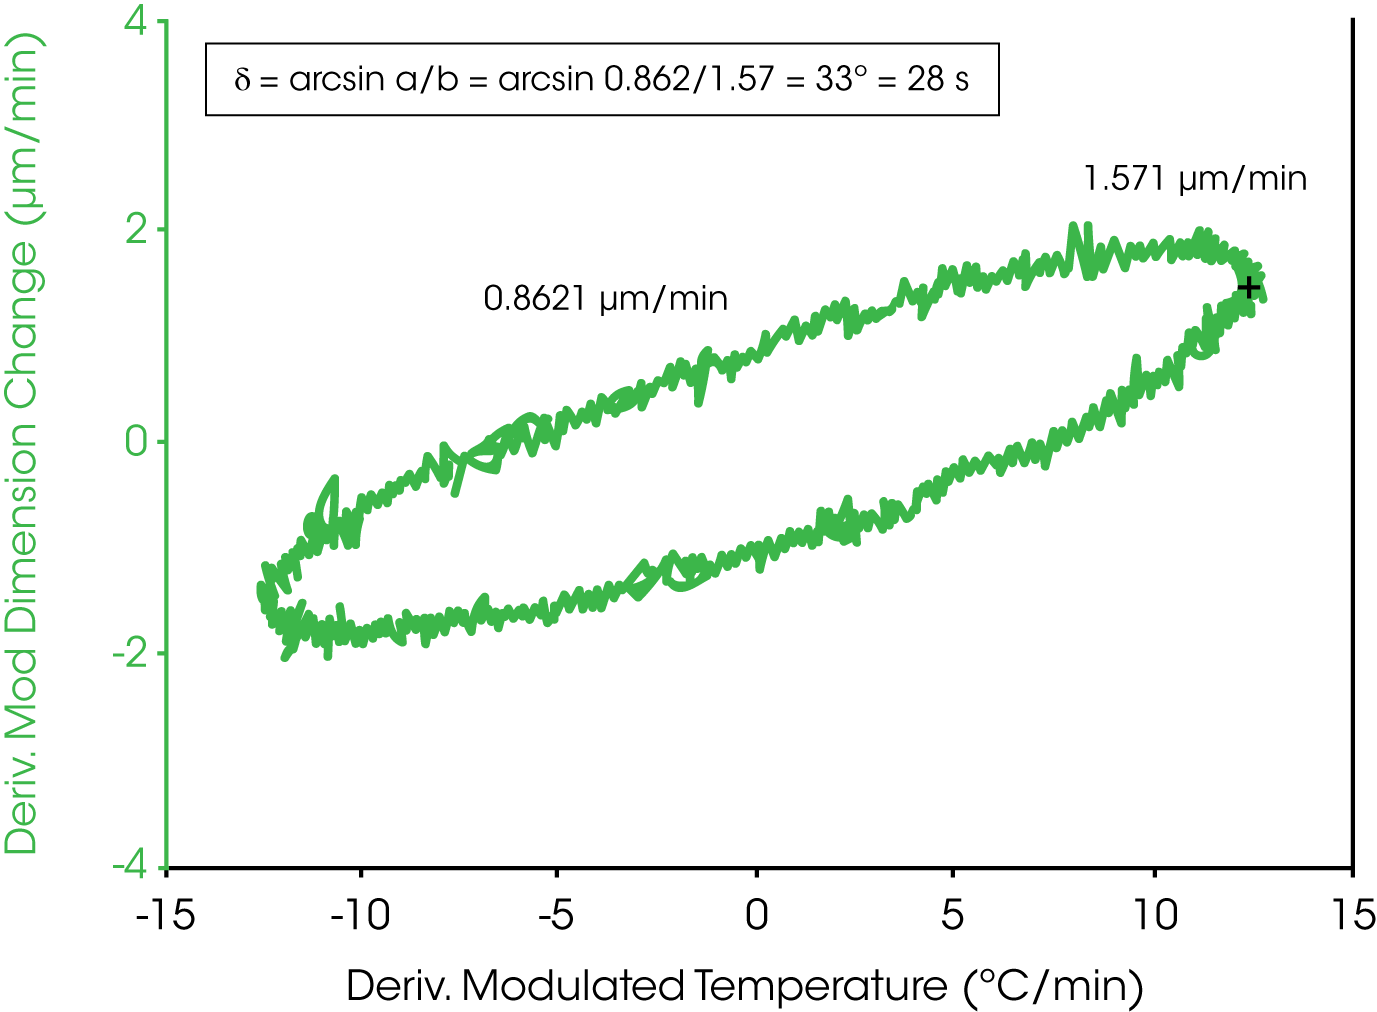 Figure 2. Lissajou Plot to Determine Phase Lag